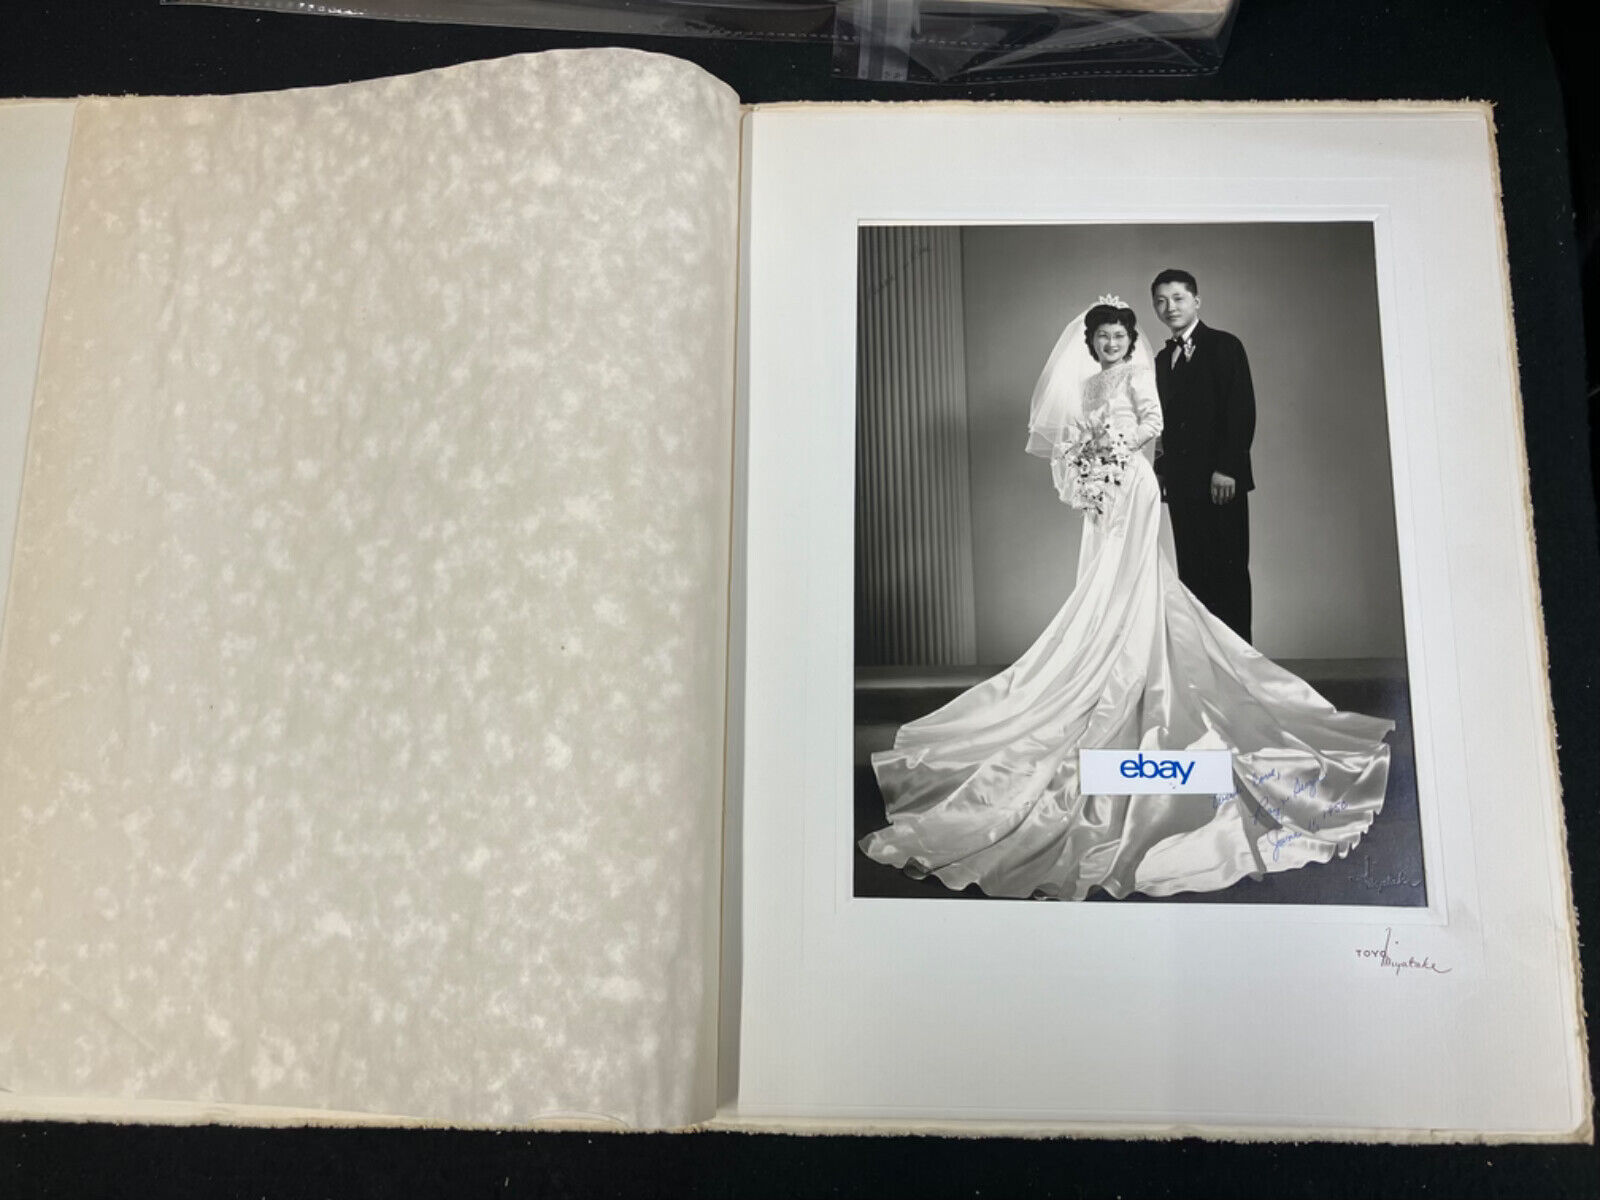 1950 JAPANESE WEDDING COUPLE 8X10 B&W PORTRAIT PHOTO IN CARDBOARD FOLDOUT, L.A.